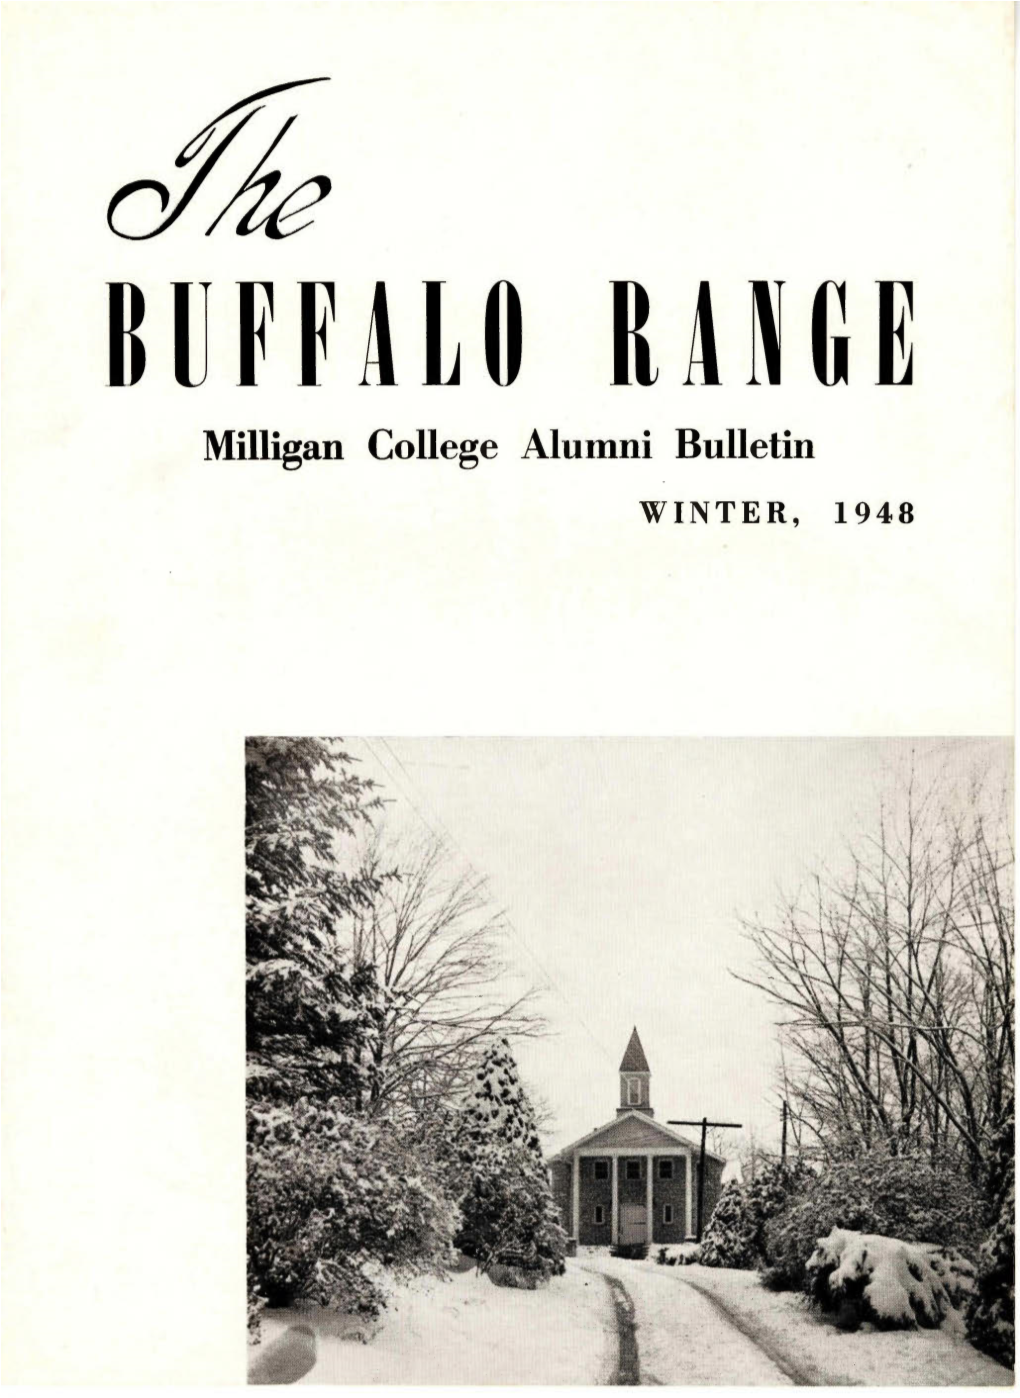 Milligan College Alu1nni Bulletin WINTER, 1948 the BUFFALO RANGE MI LL IG an CO LL EG E AL UMNI BUL L ETIN WINTER, 1948